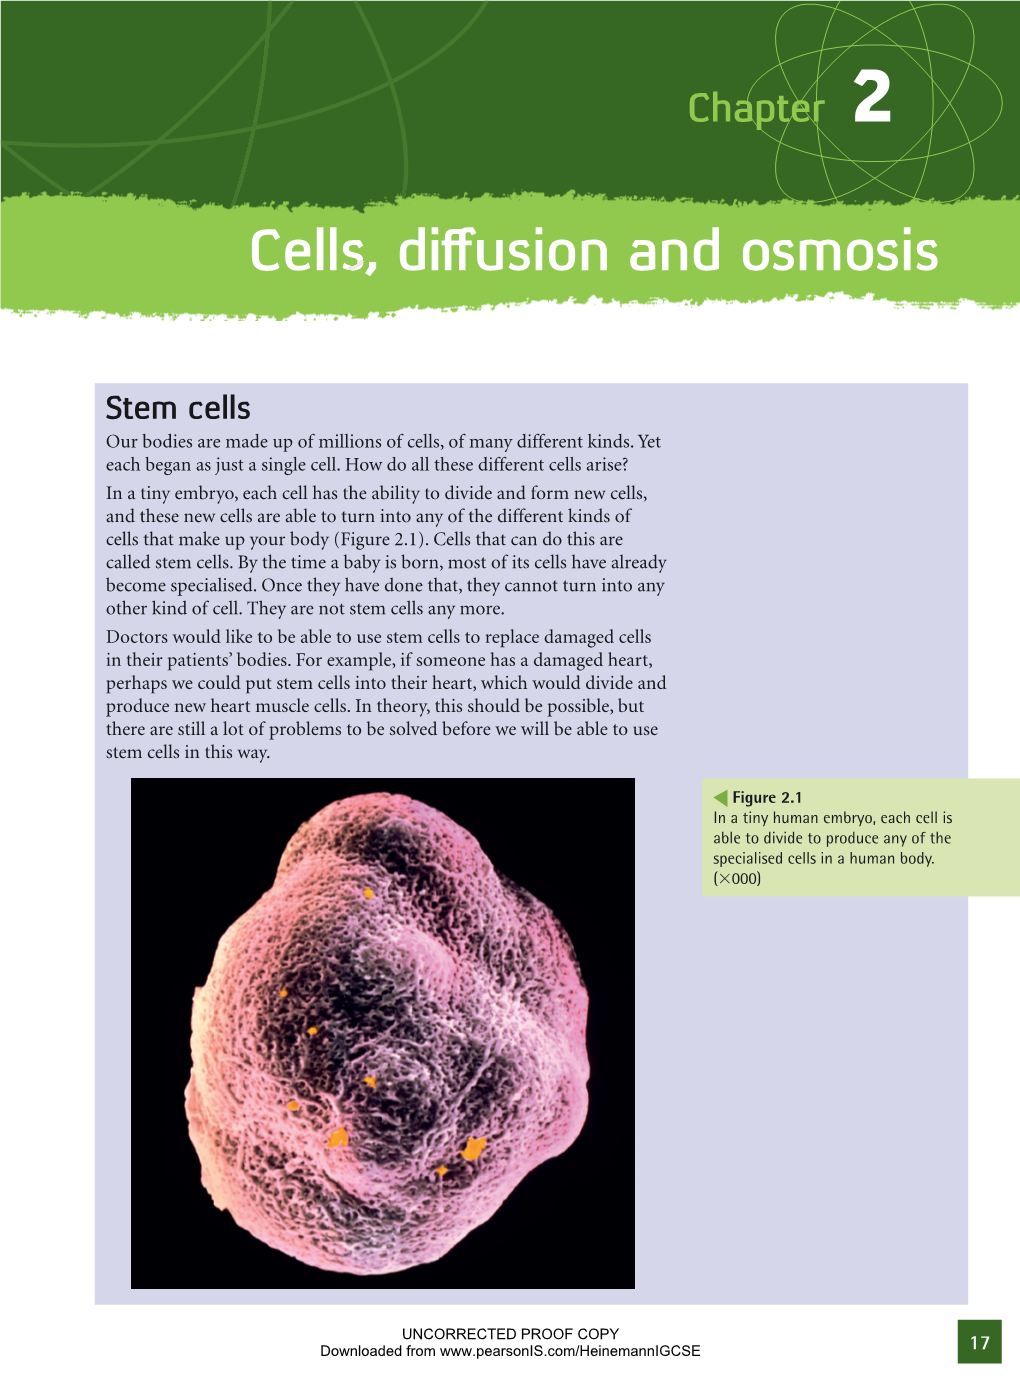 Cells, Diffusion and Osmosis